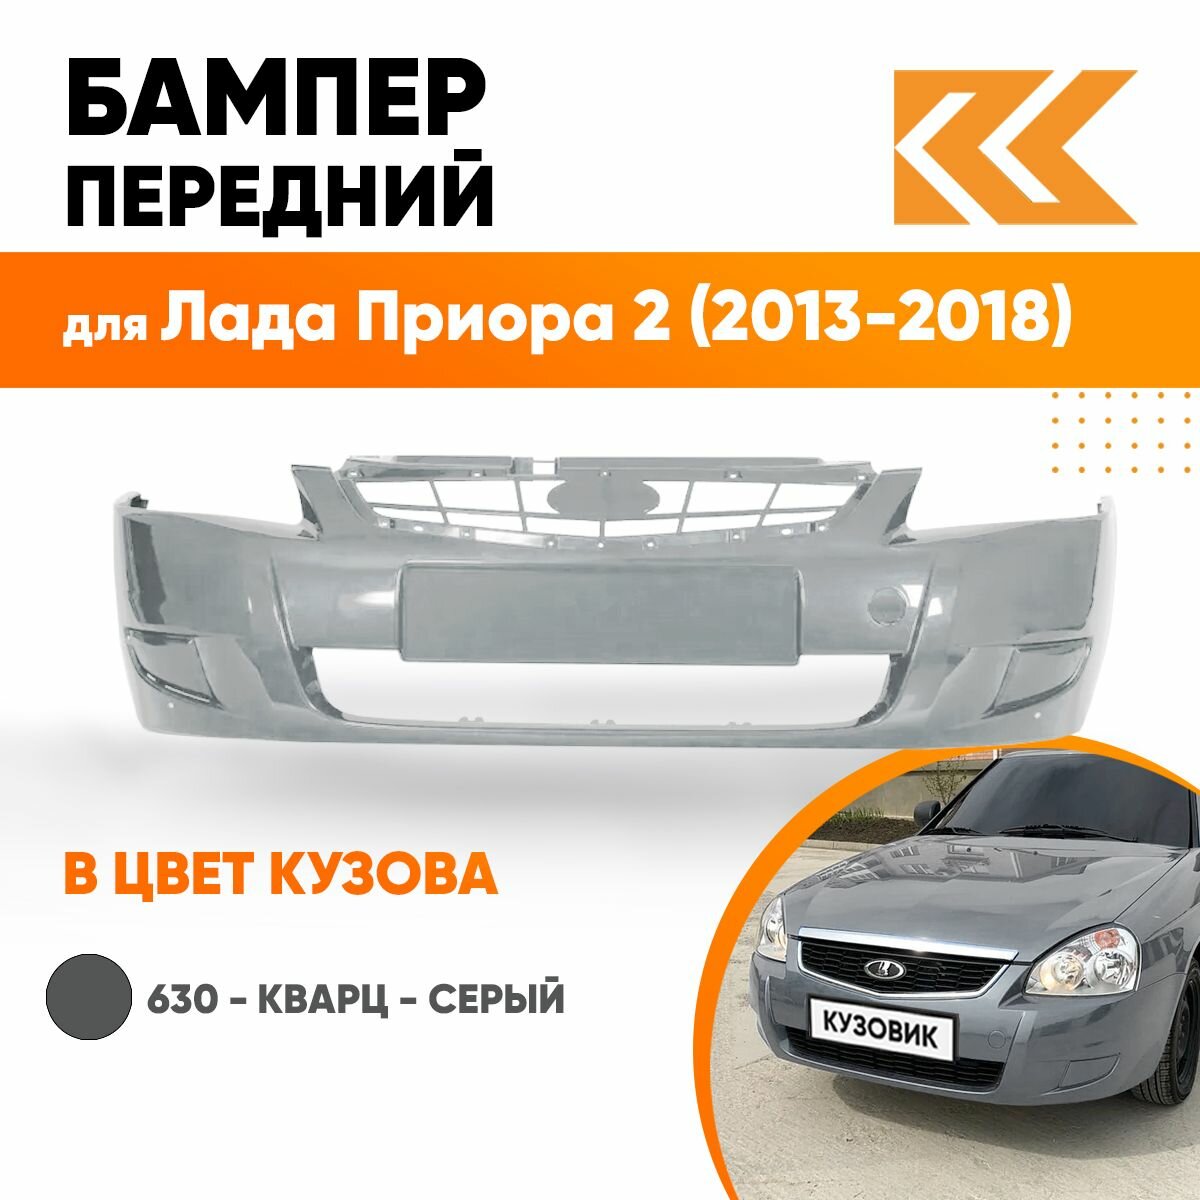 Бампер передний в цвет кузова Лада Приора 2 630 - Кварц - Серый